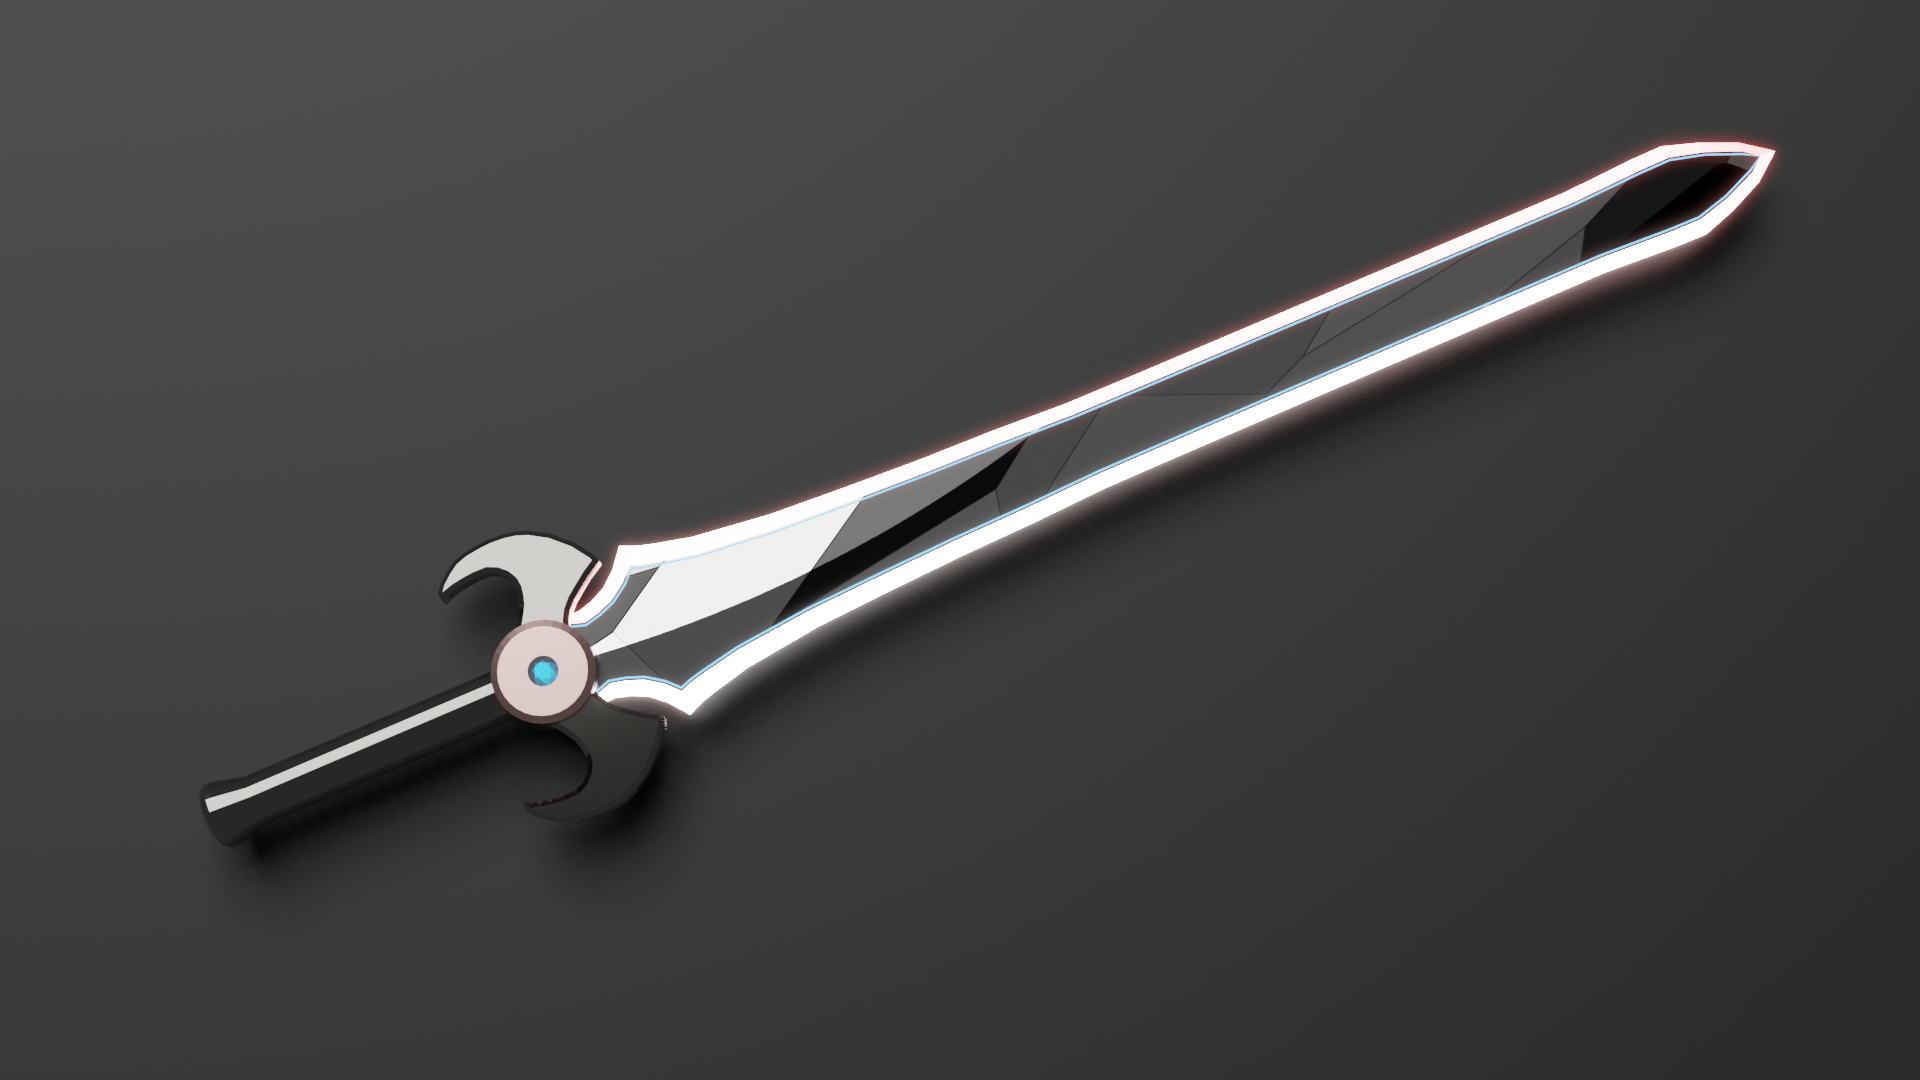 General 1920x1080 sword Blender simple background weapon minimalism CGI digital art